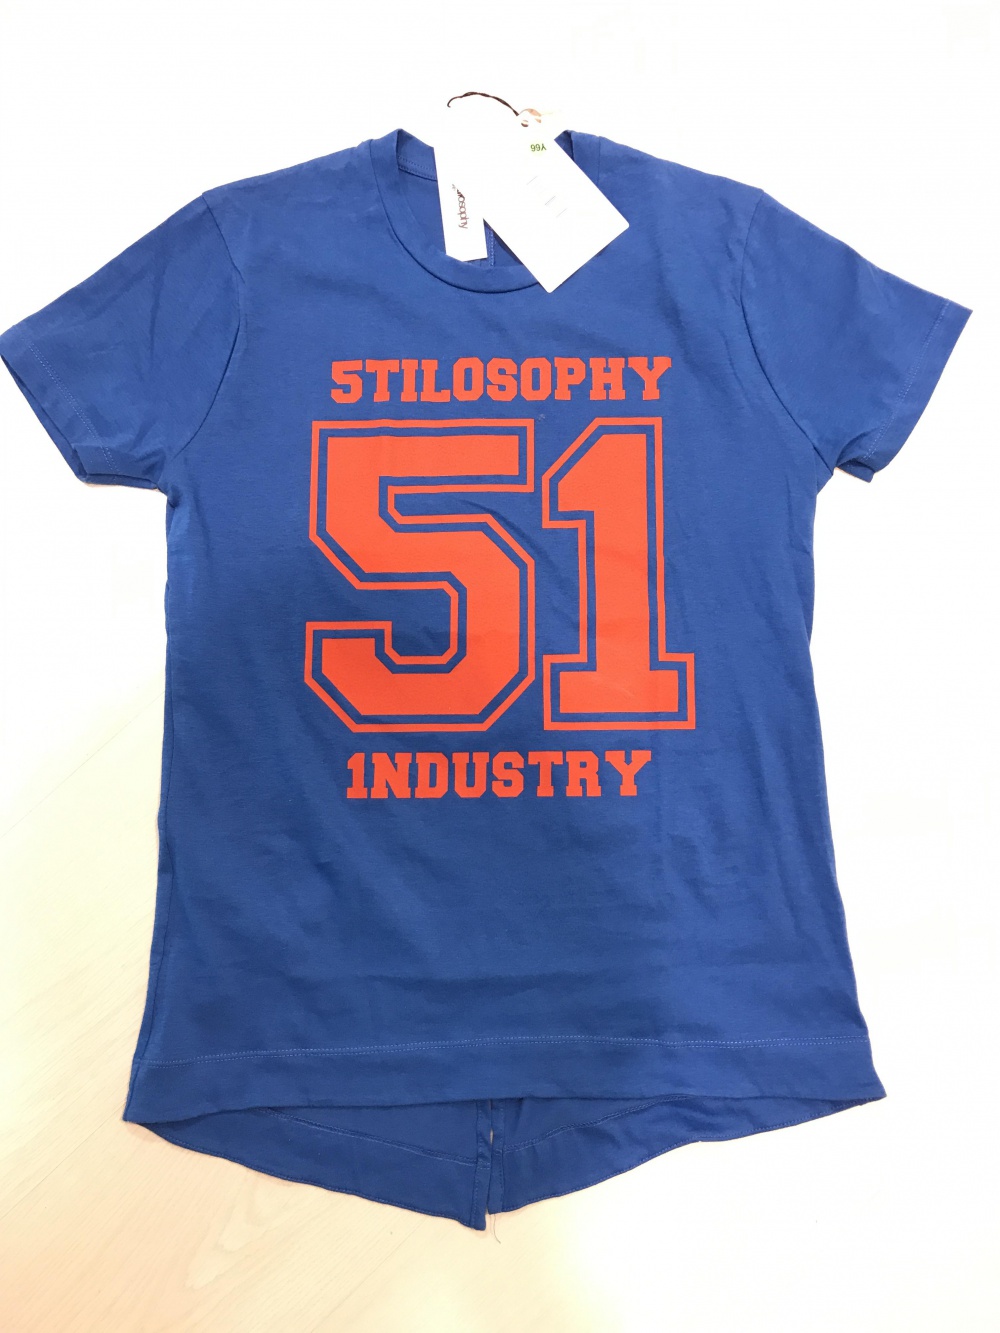 Футболка Stilosophy Industry M/L